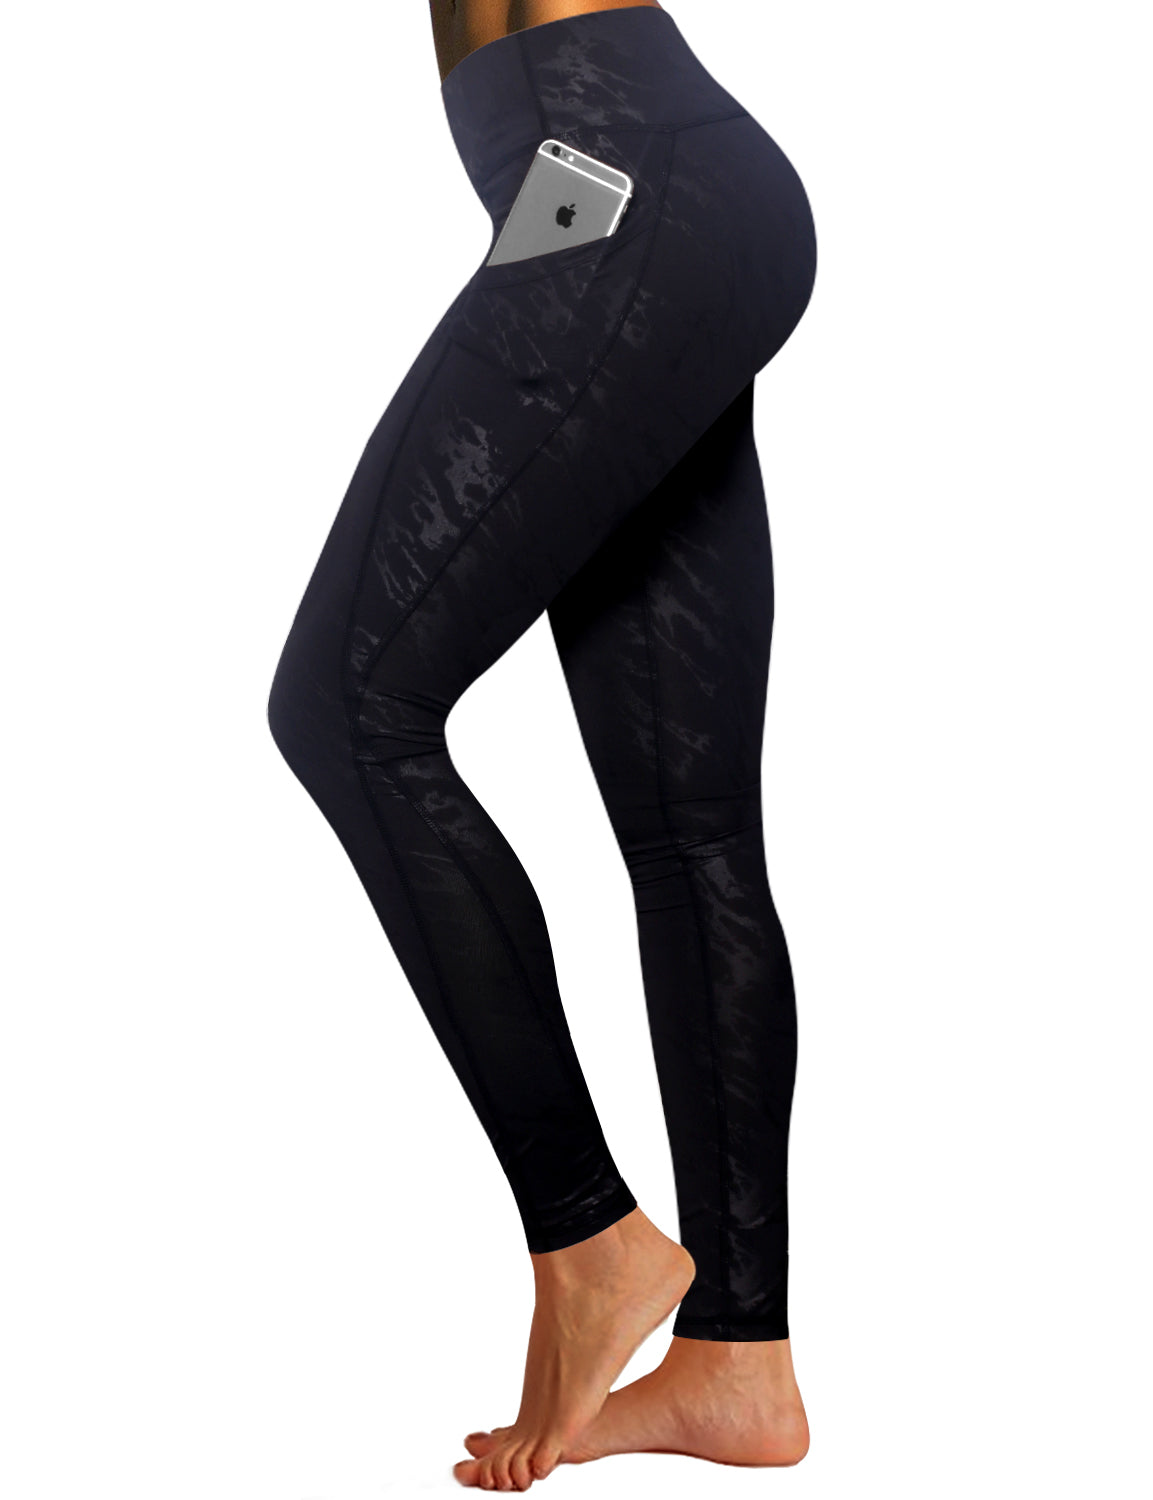 26" inseam 3D Printed Yoga Pants PAINT